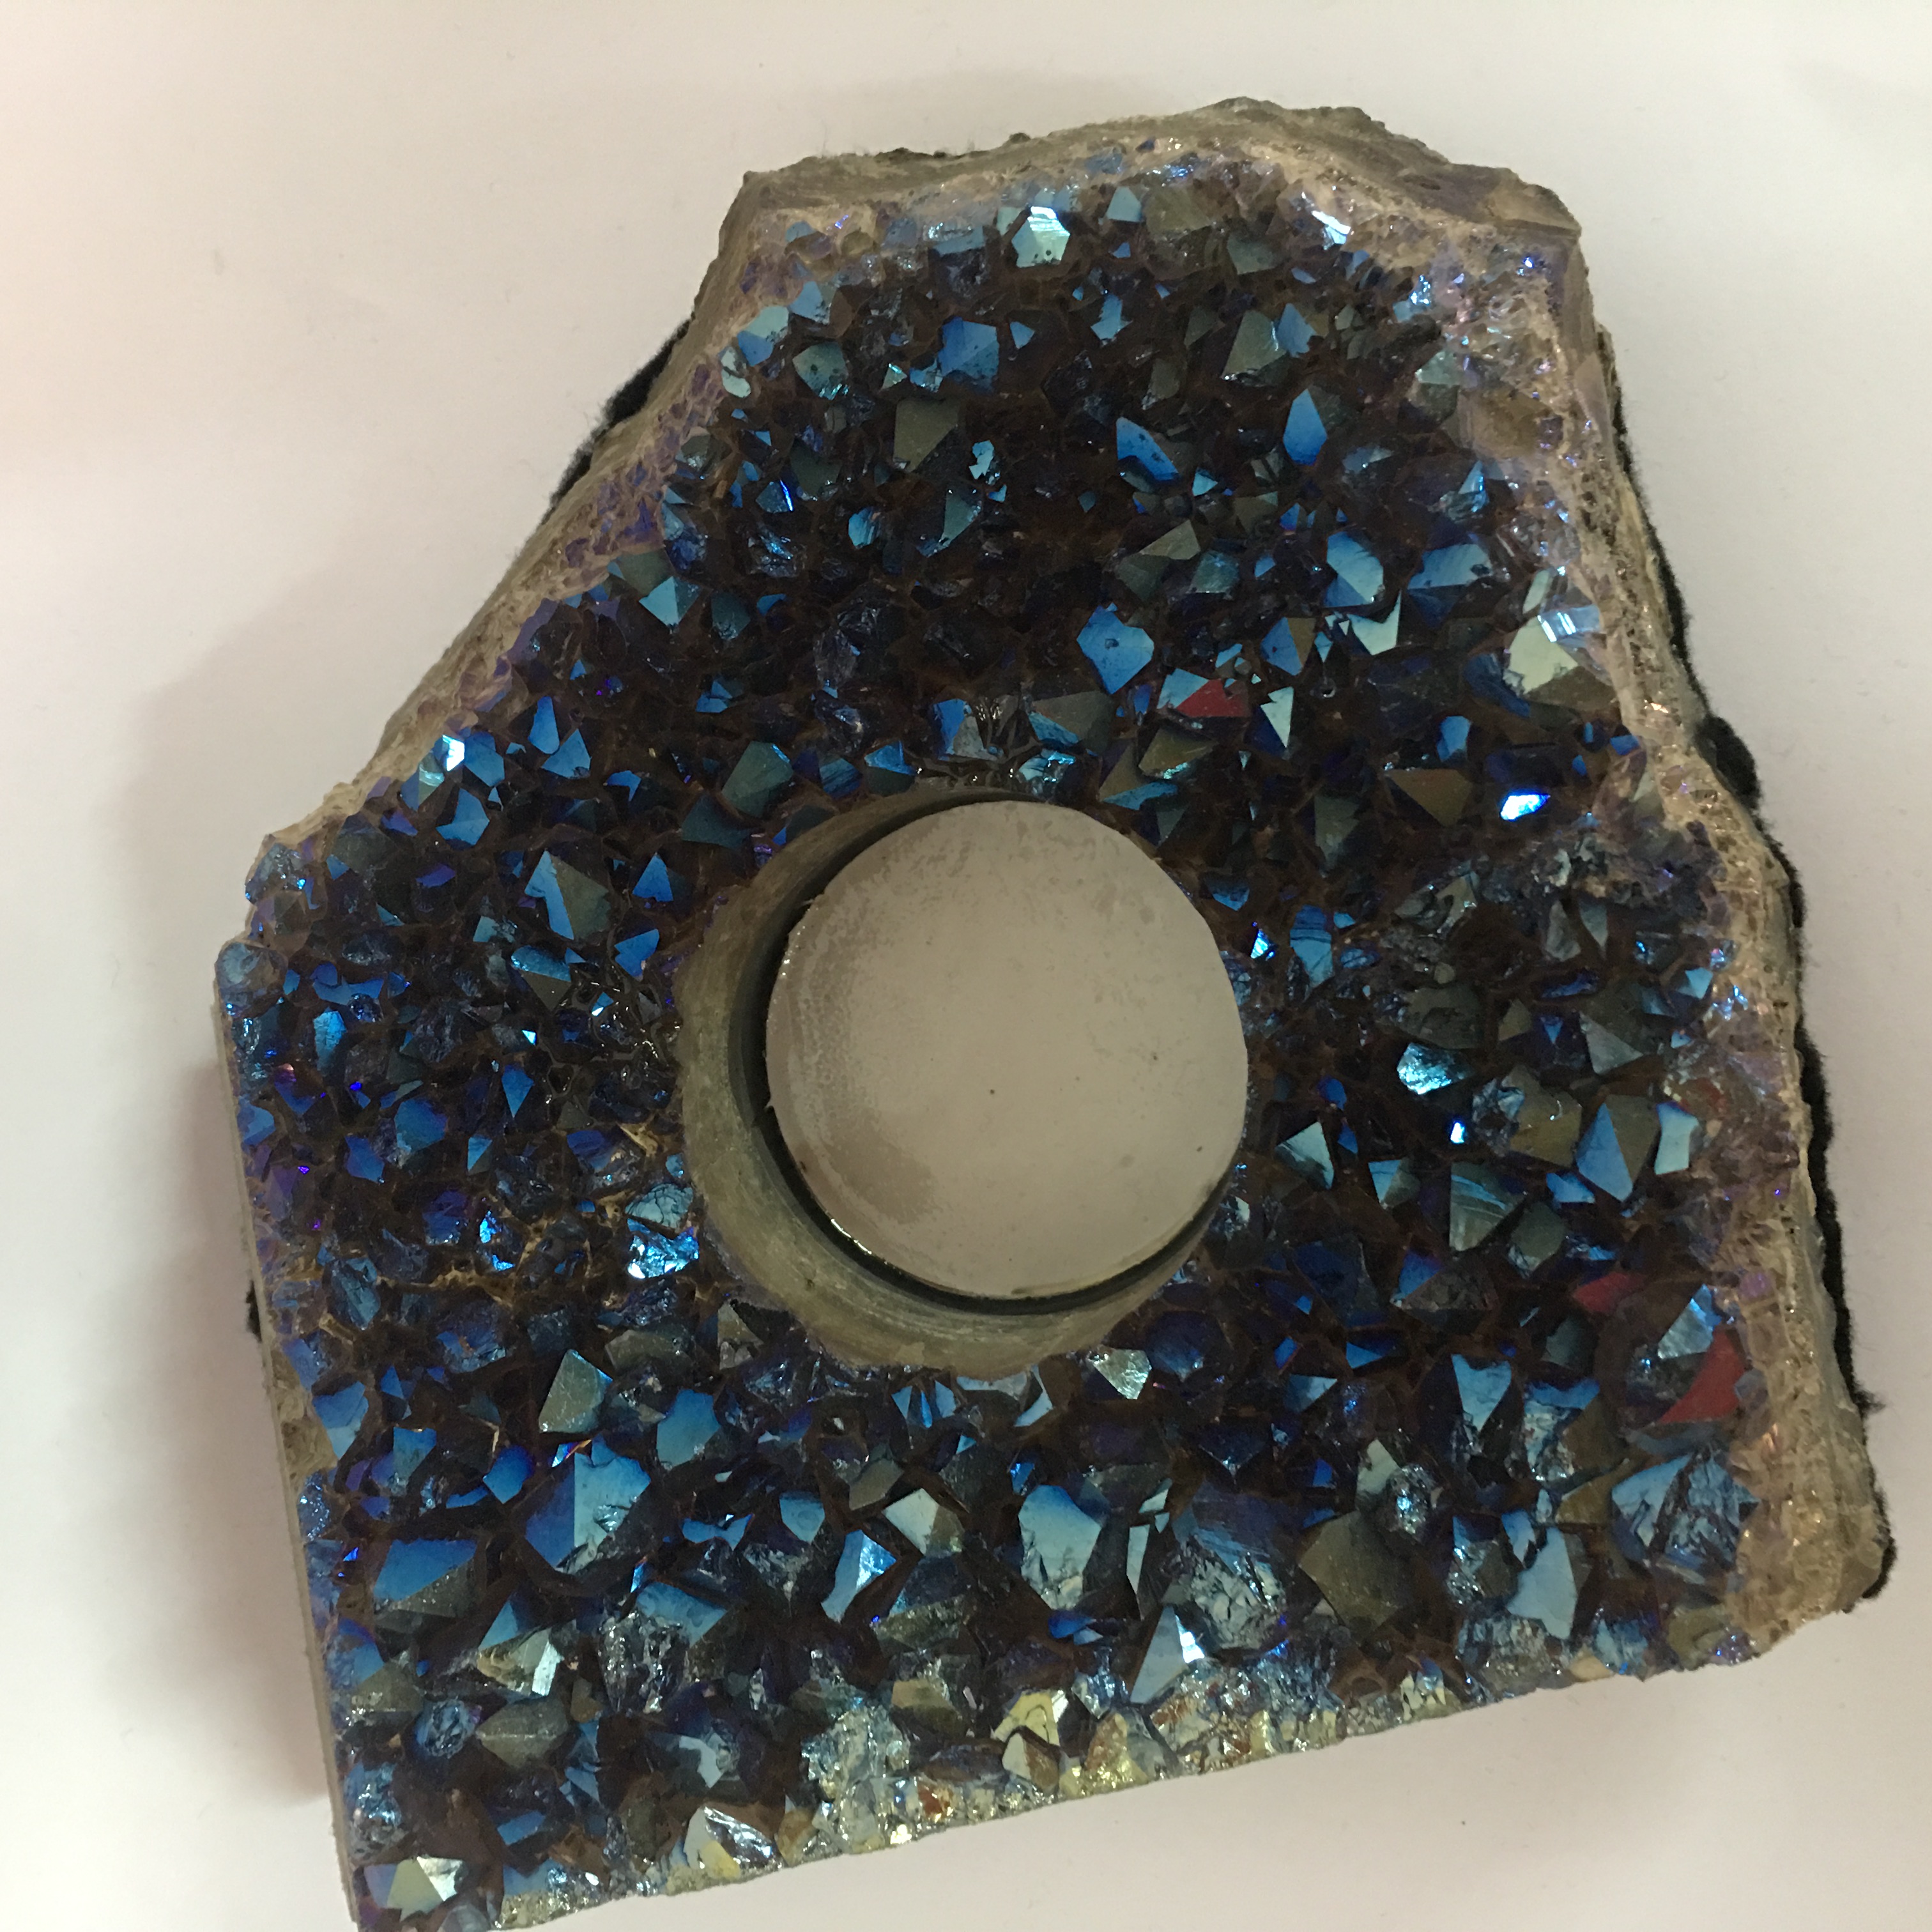 Stones from Uruguay - Cobalt Blue Amethyst Druzy Candle Holder 